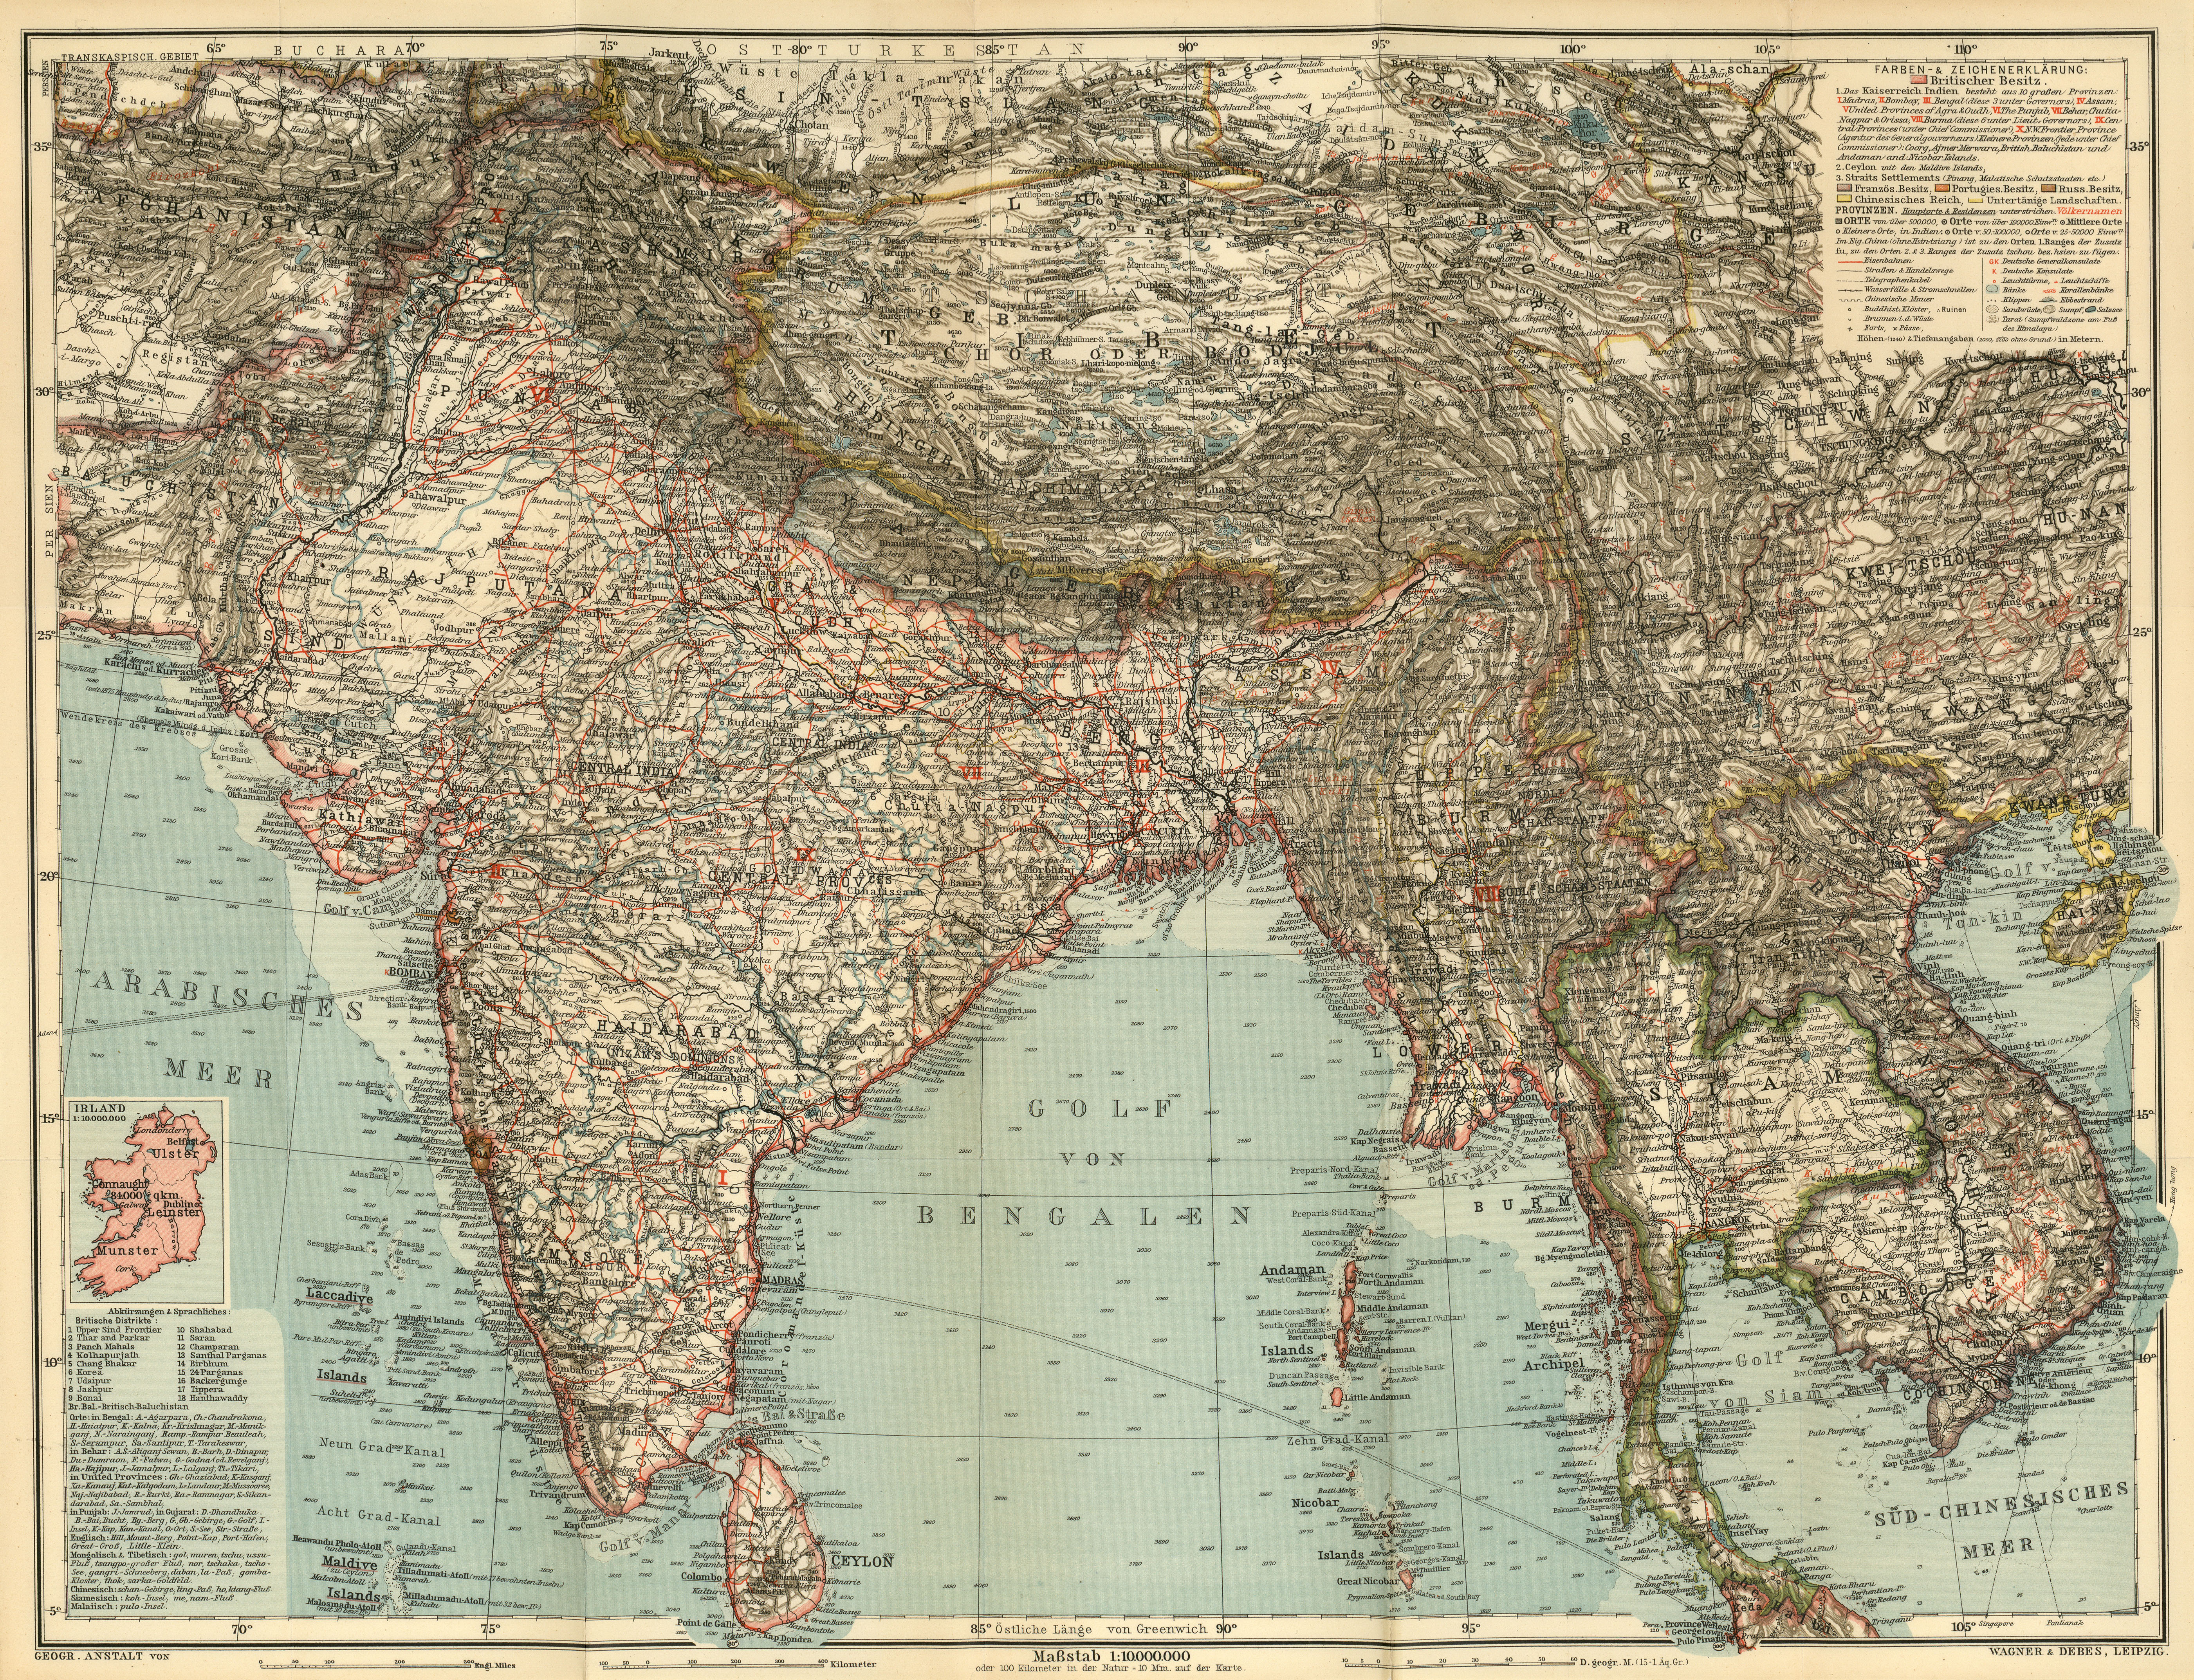 http://www.lib.utexas.edu/maps/historical/baedeker_indien_1914/txu-pclmaps-south_asia_1914.jpg